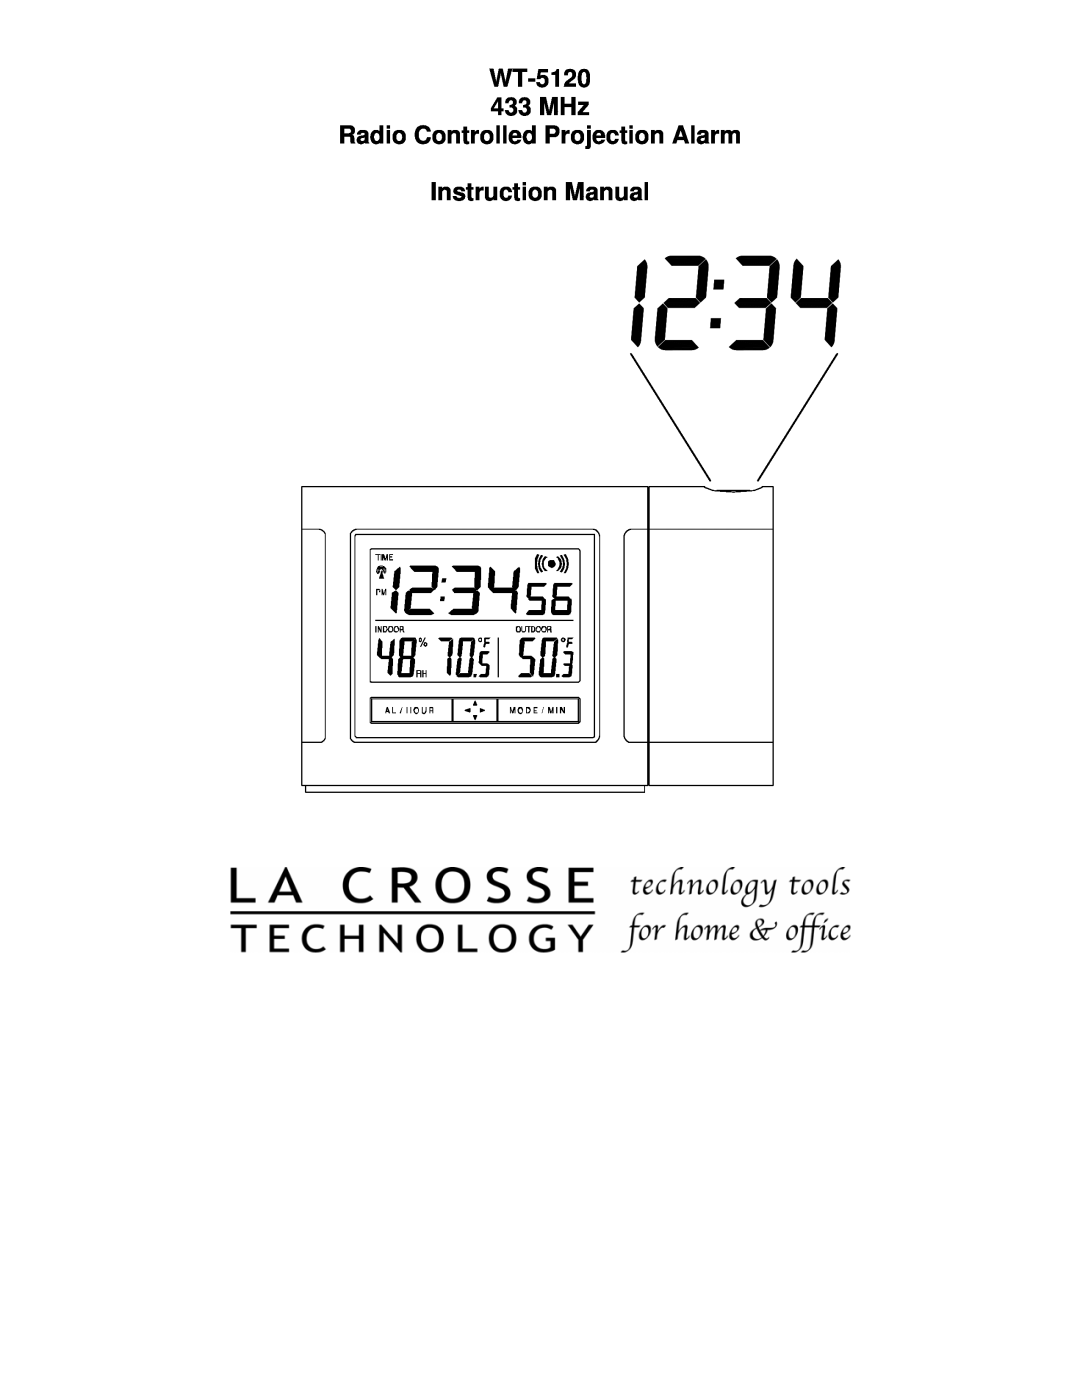 La Crosse Technology instruction manual WT-5120 433 MHz Radio Controlled Projection Alarm 